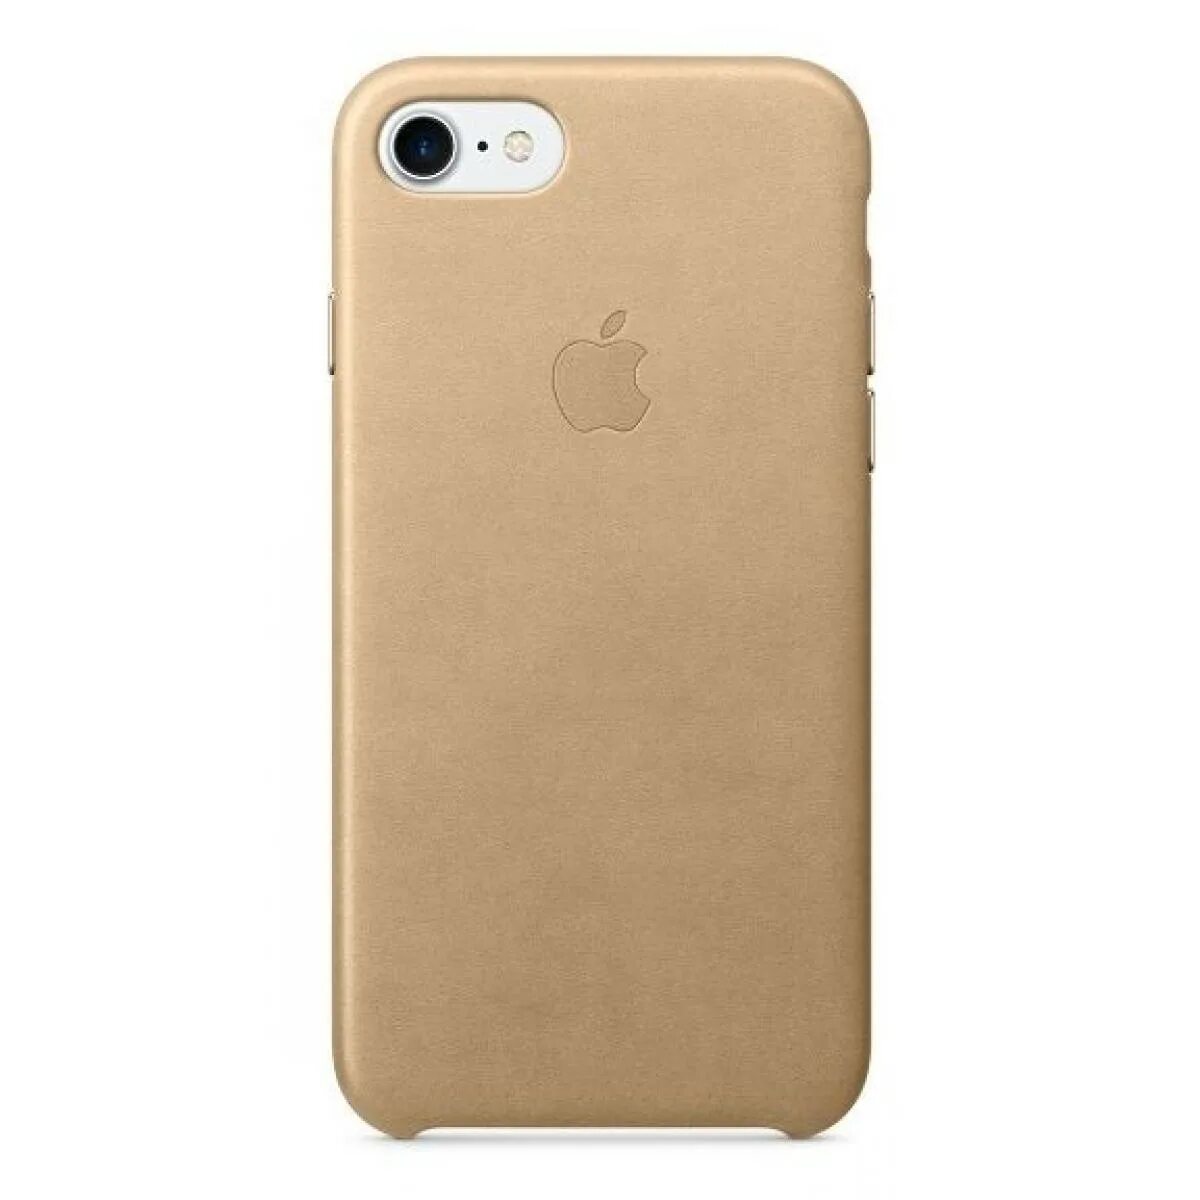 Apple case отзывы. Iphone 6s Plus Leather Case. Apple iphone 6s Plus чехлы. Накладка задняя для Apple iphone 6/6s серый. Чехлы Apple iphone 6s жёлтый и бежевый.